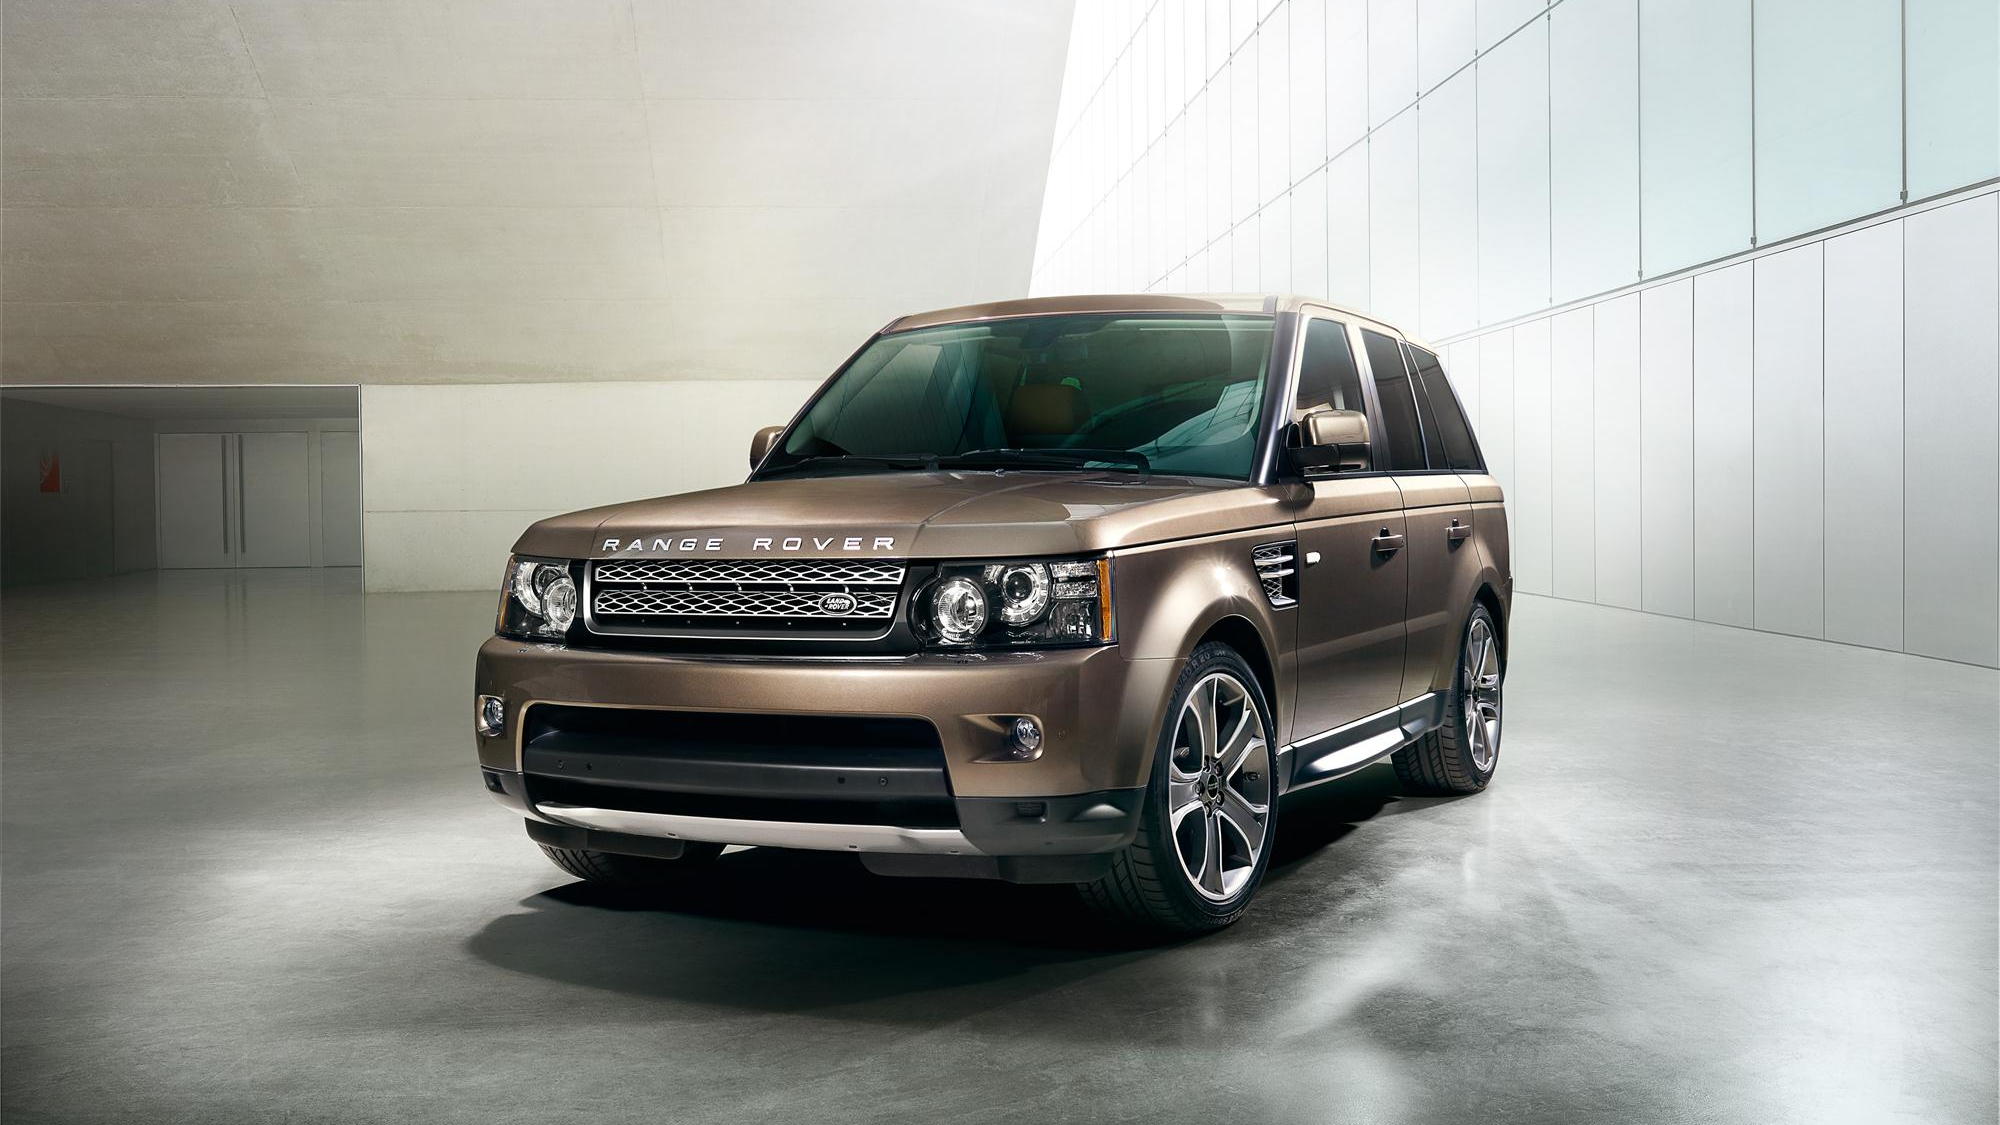 2012 Range Rover Sport